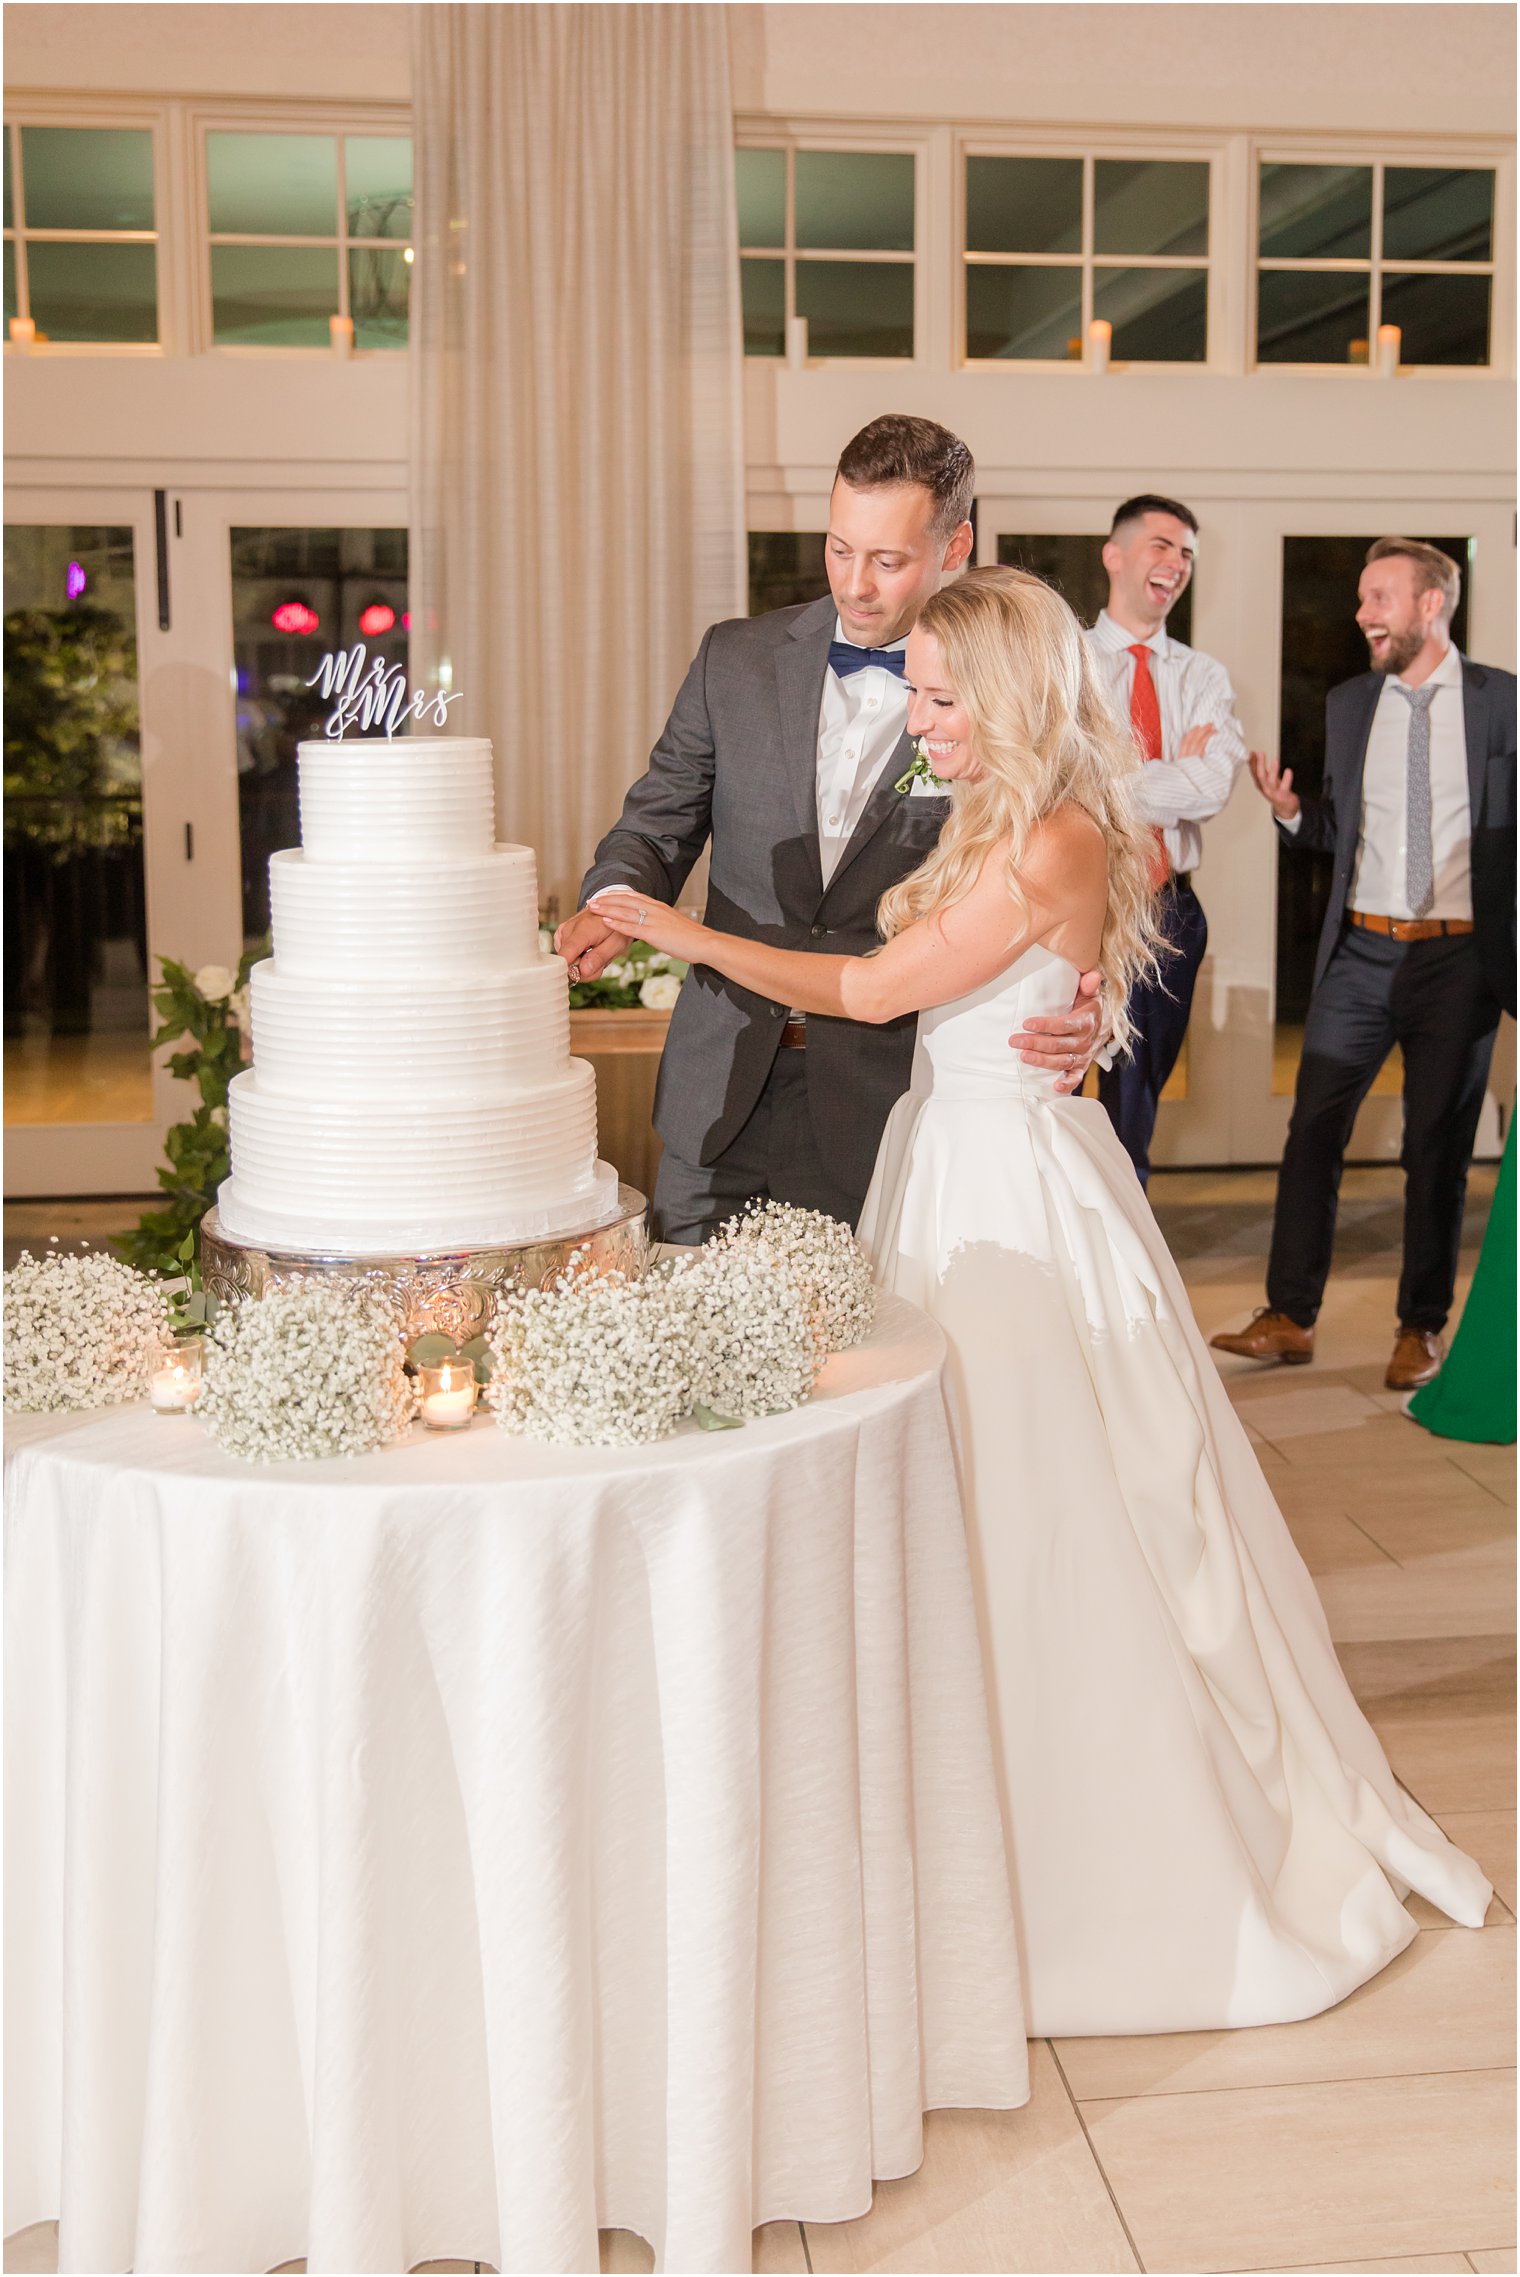 newlyweds cut wedding cake at New Jersey wedding reception